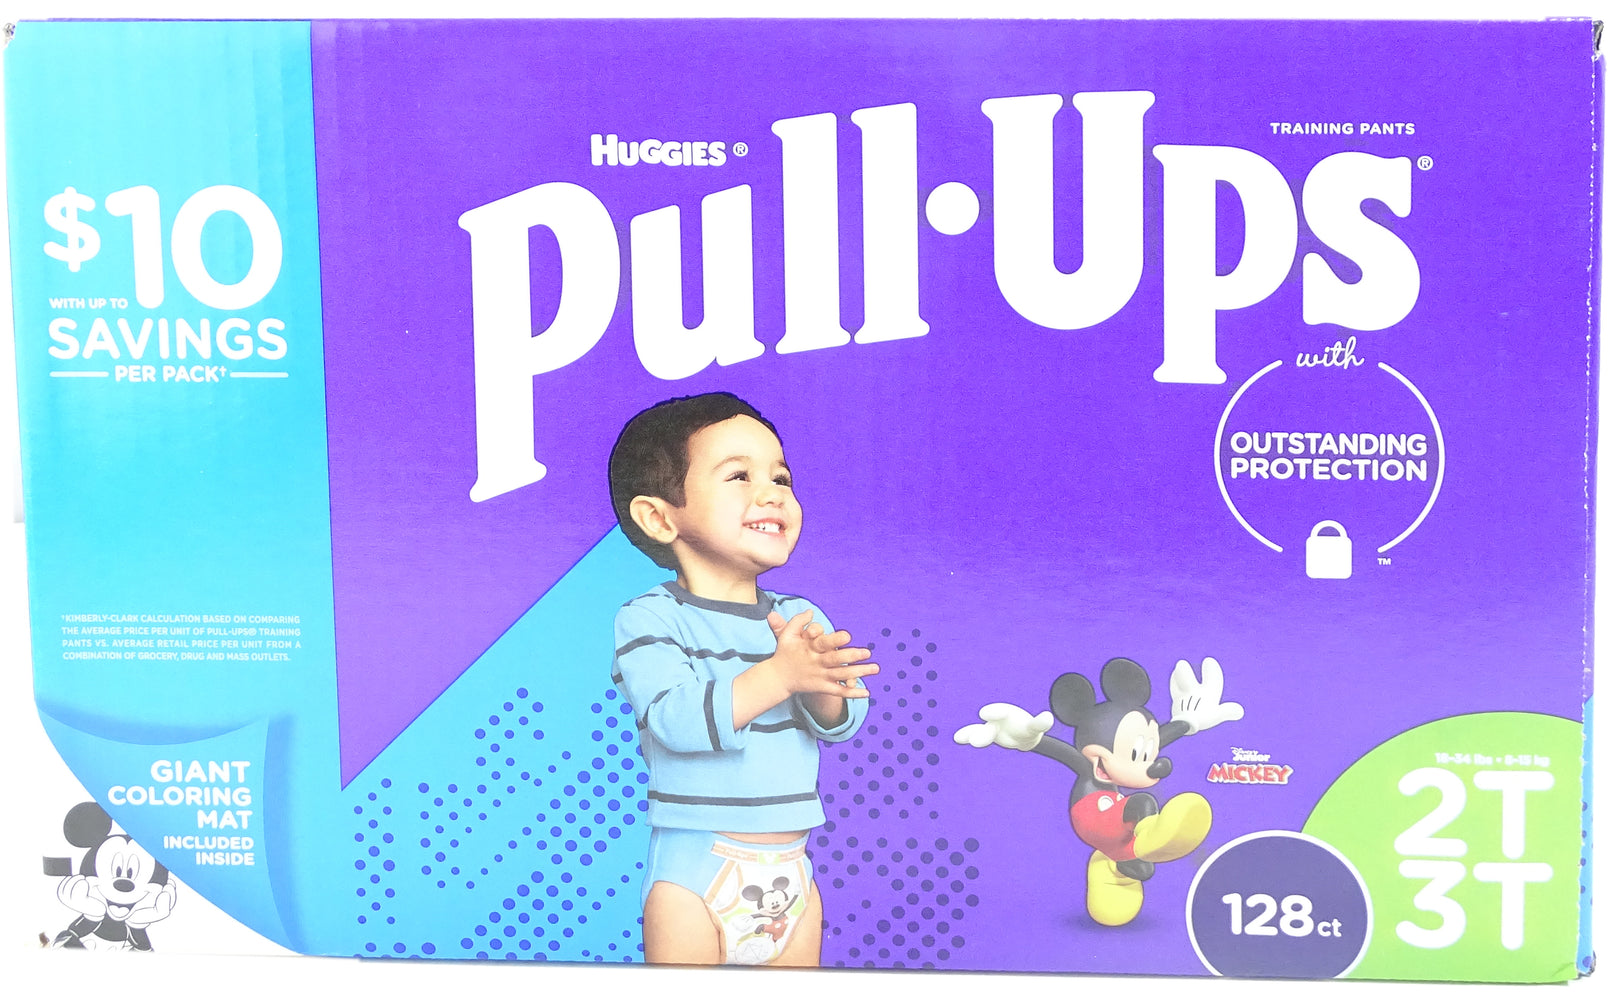  Pull-Ups Huggies Training Pants for Boys, 2T/3T (18-34